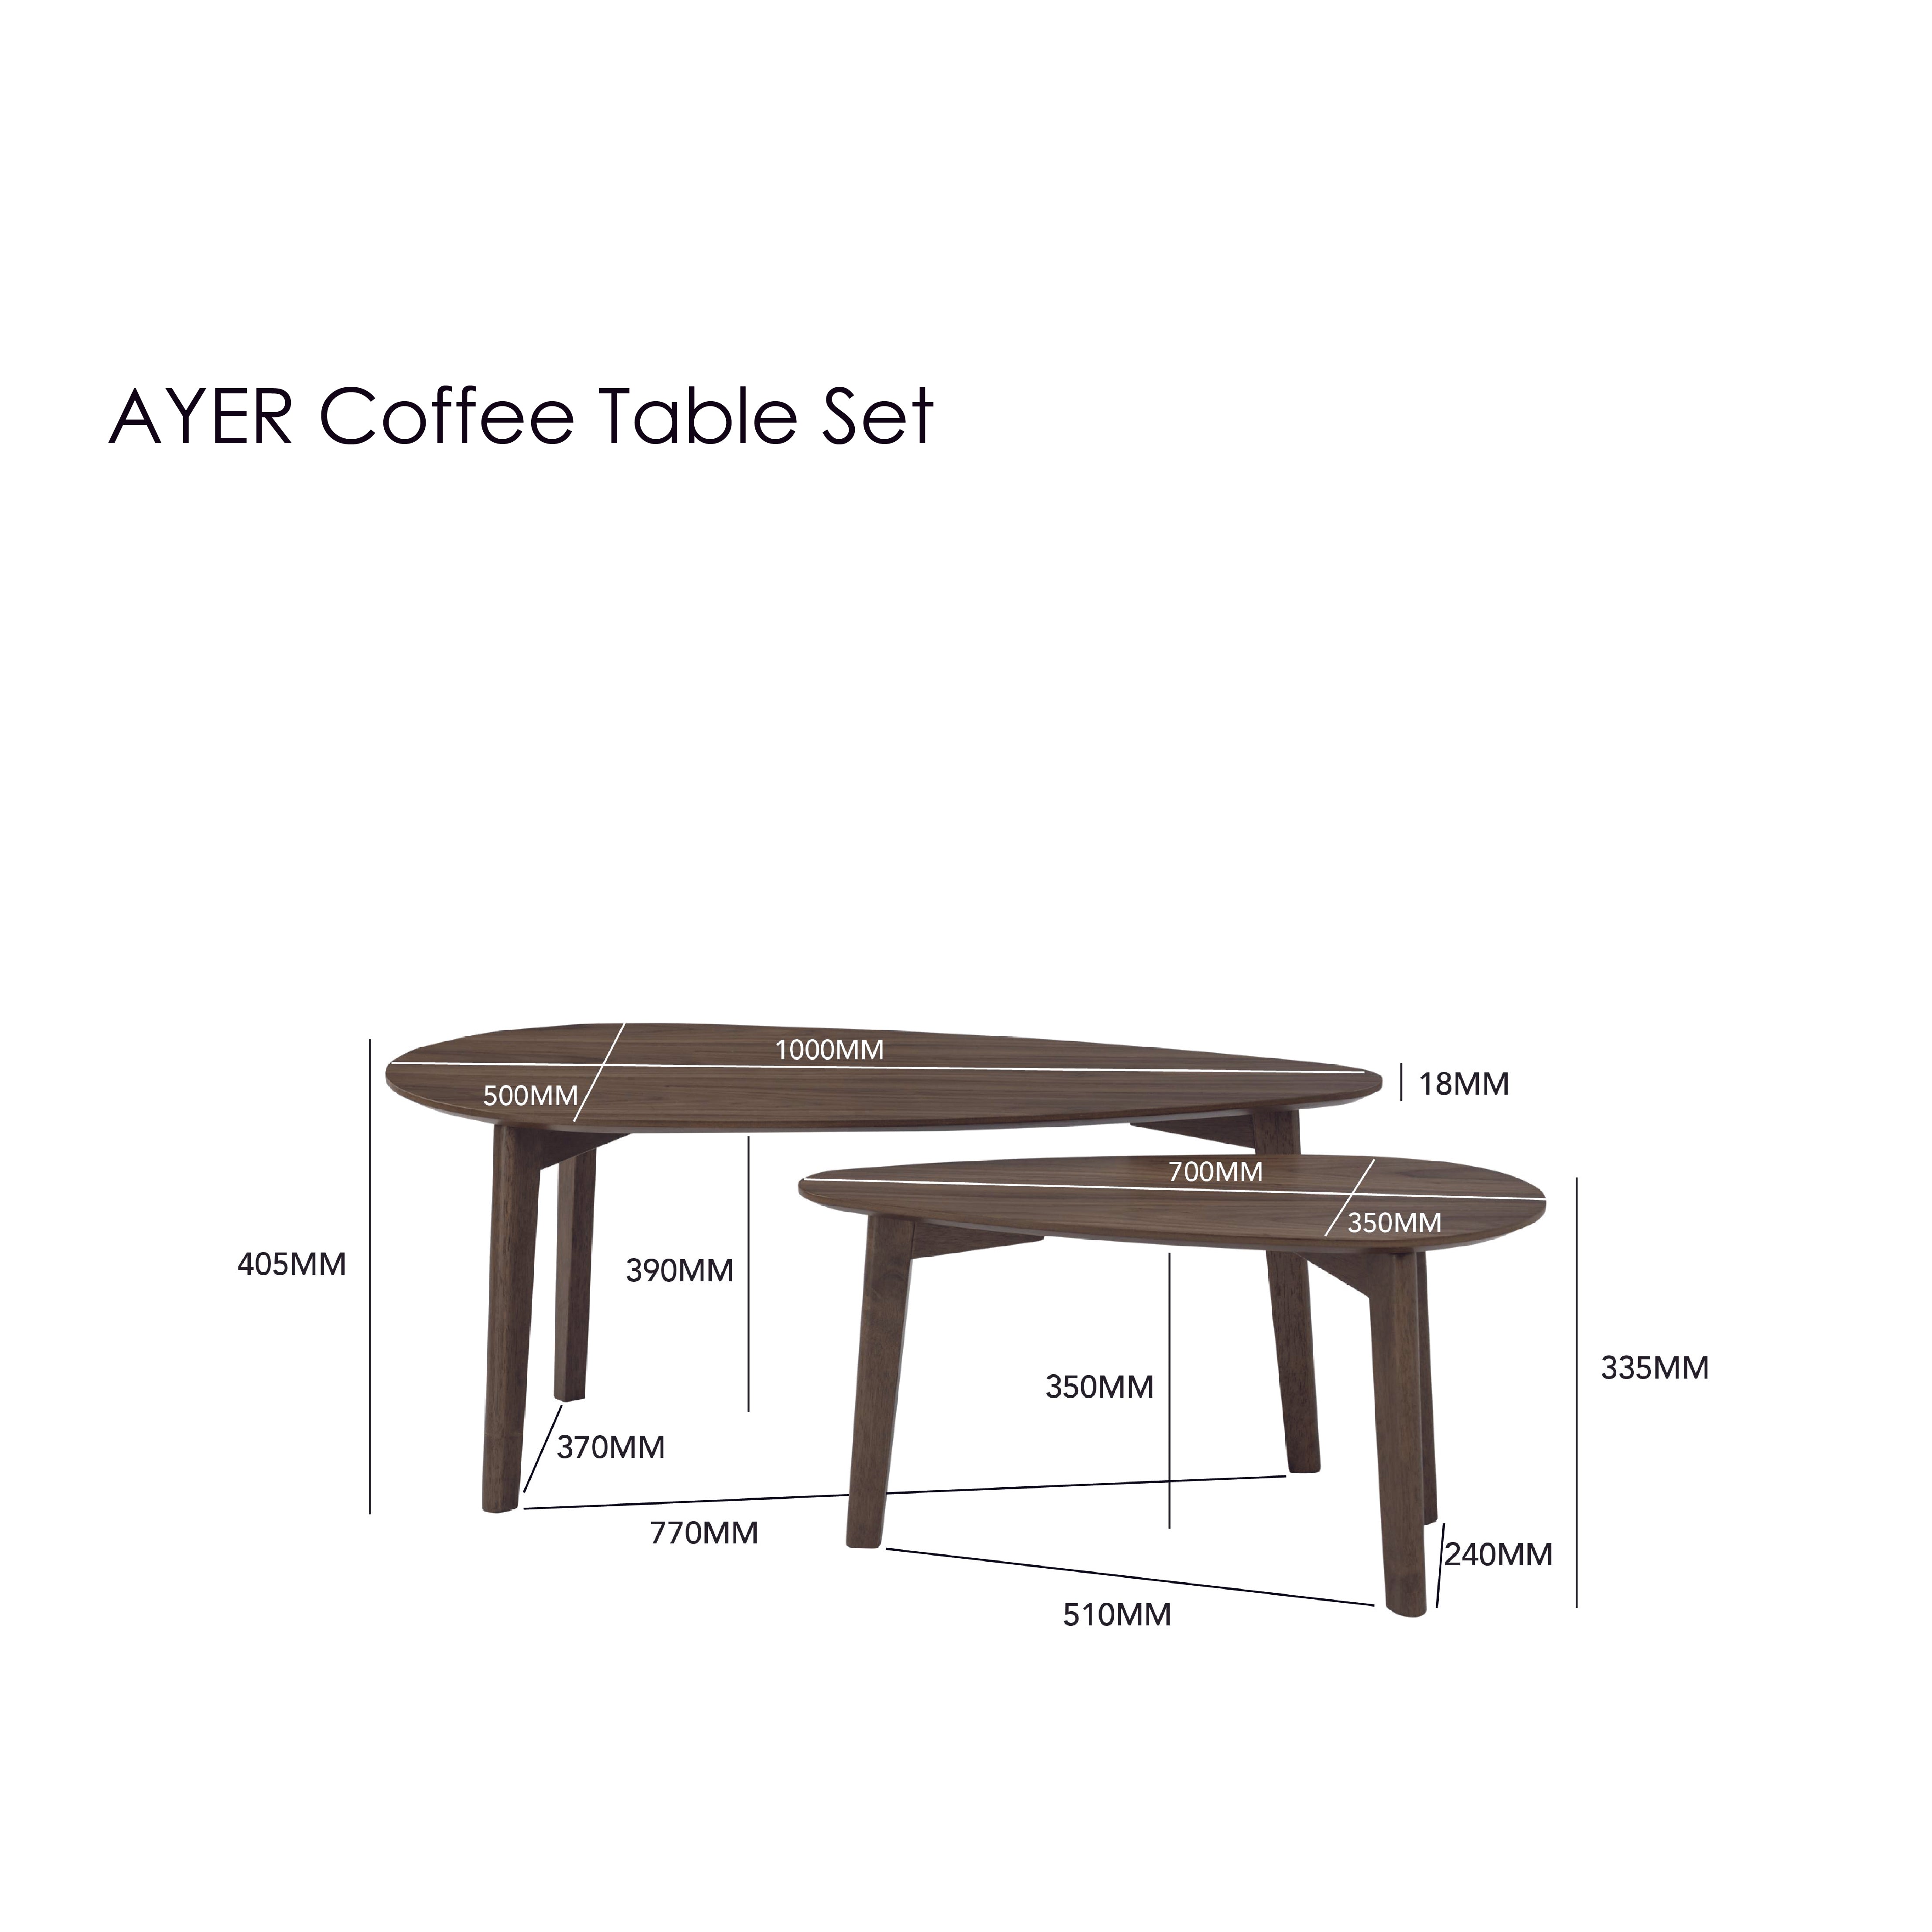 AYER Coffee Table Set